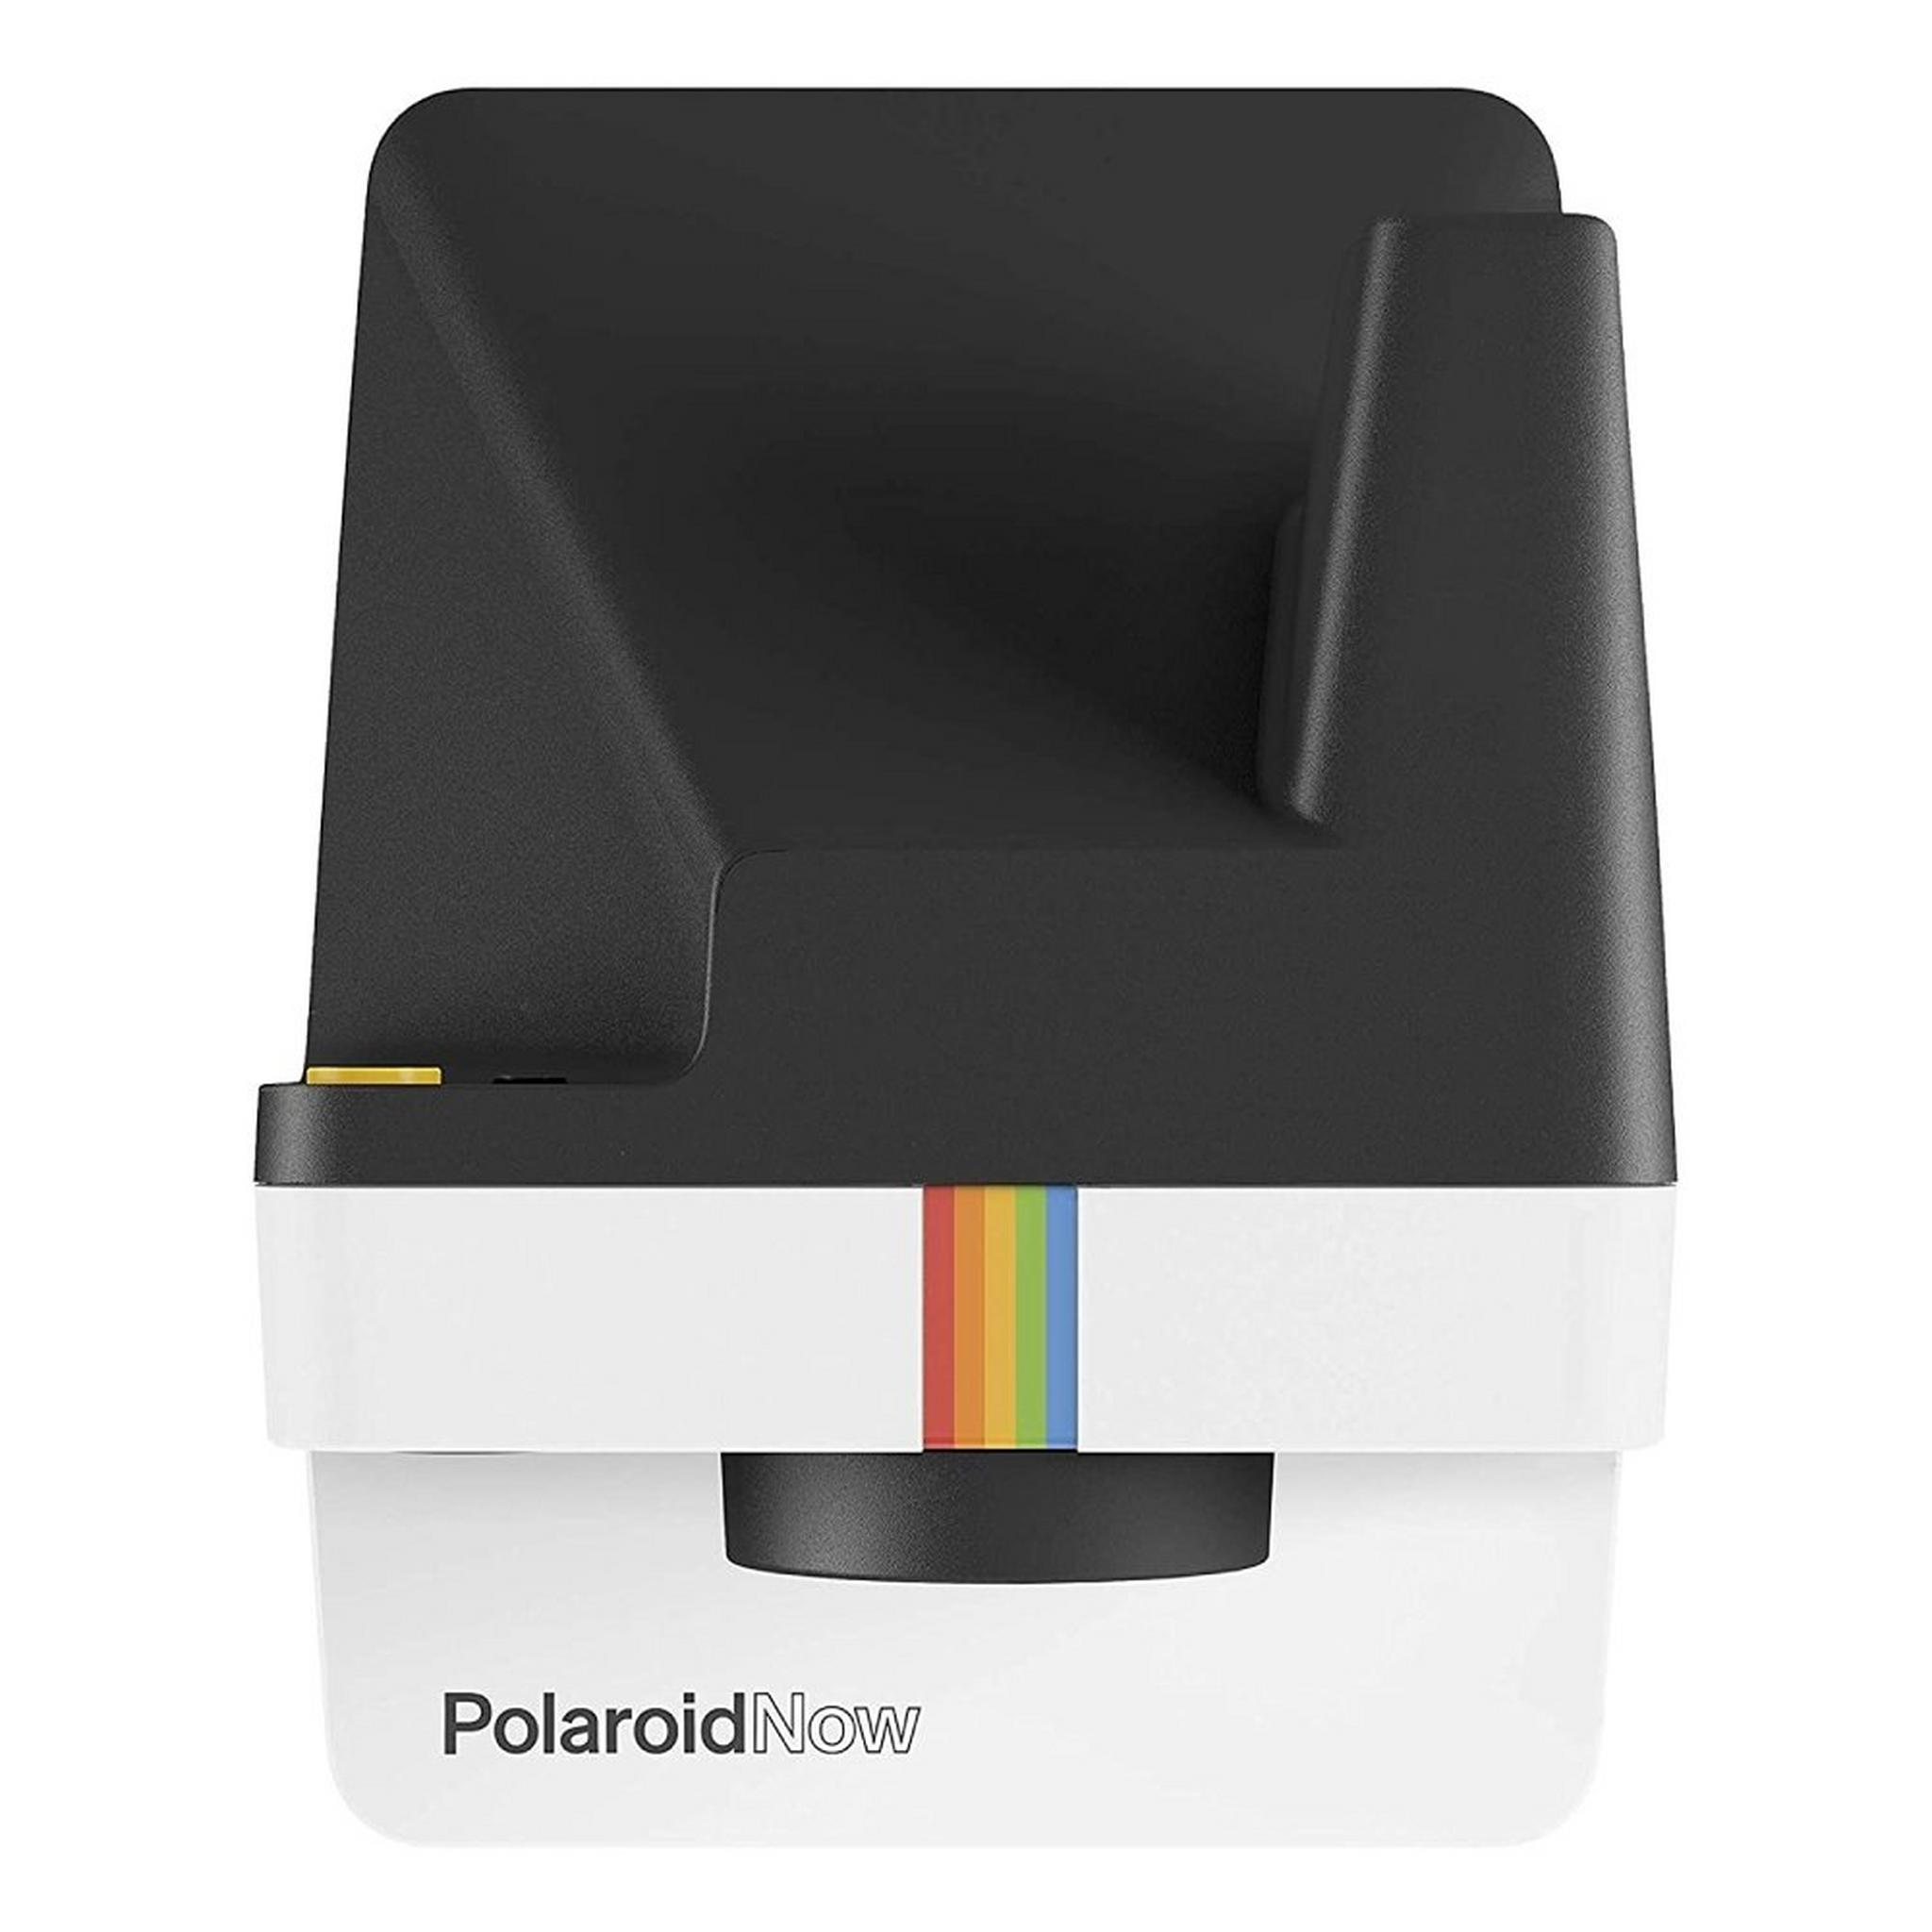 Polaroid Now Instant Film Camera - Black and White